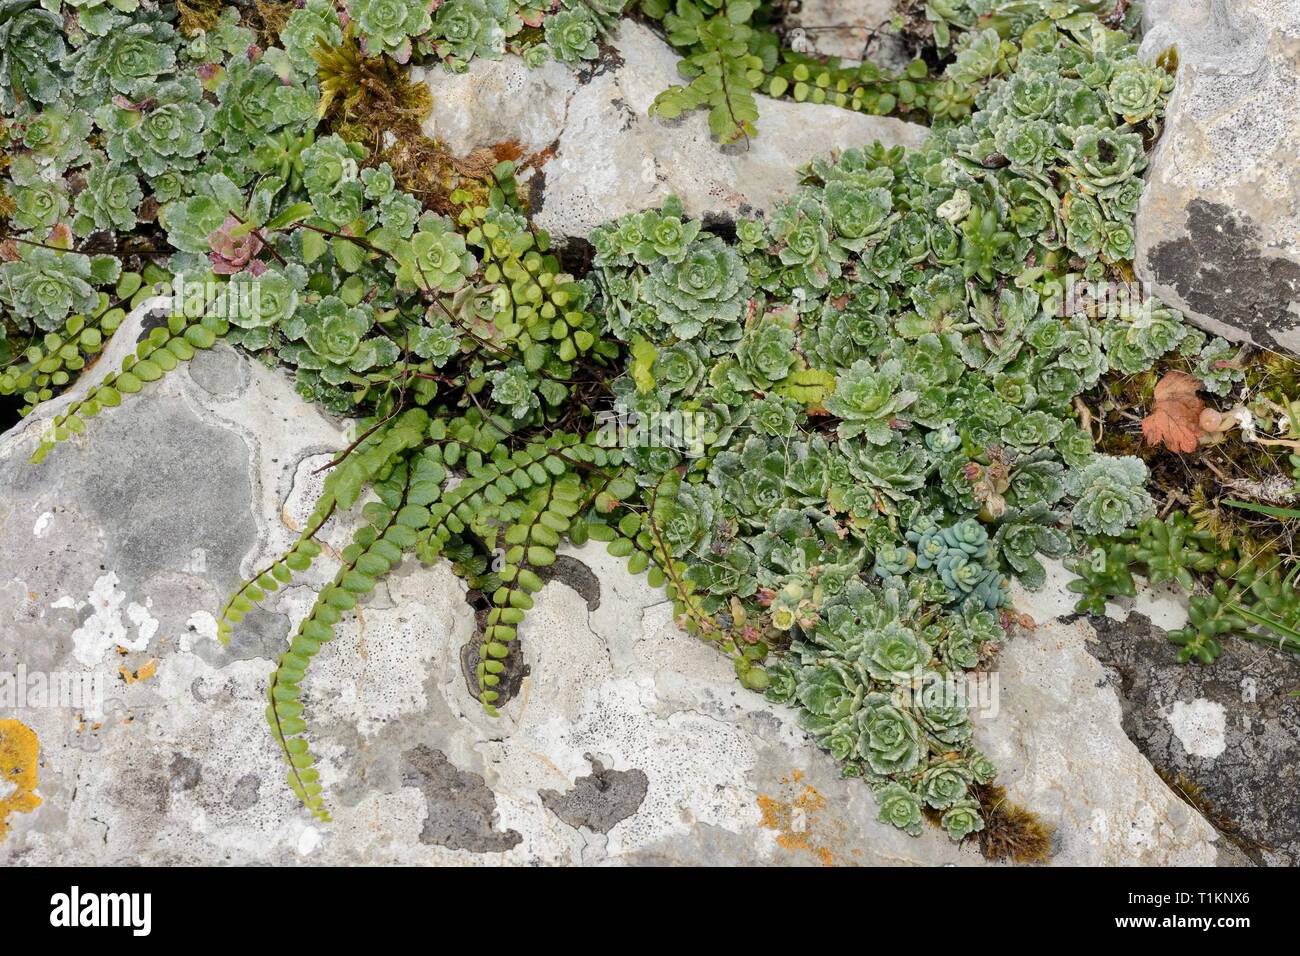 Livelong Saxifrage (Saxifraga paniculata) and Maidenhair spleenwort (Asplenium trichomanes) growing in limestone rock crevices, Picos de Europa, Spain Stock Photo